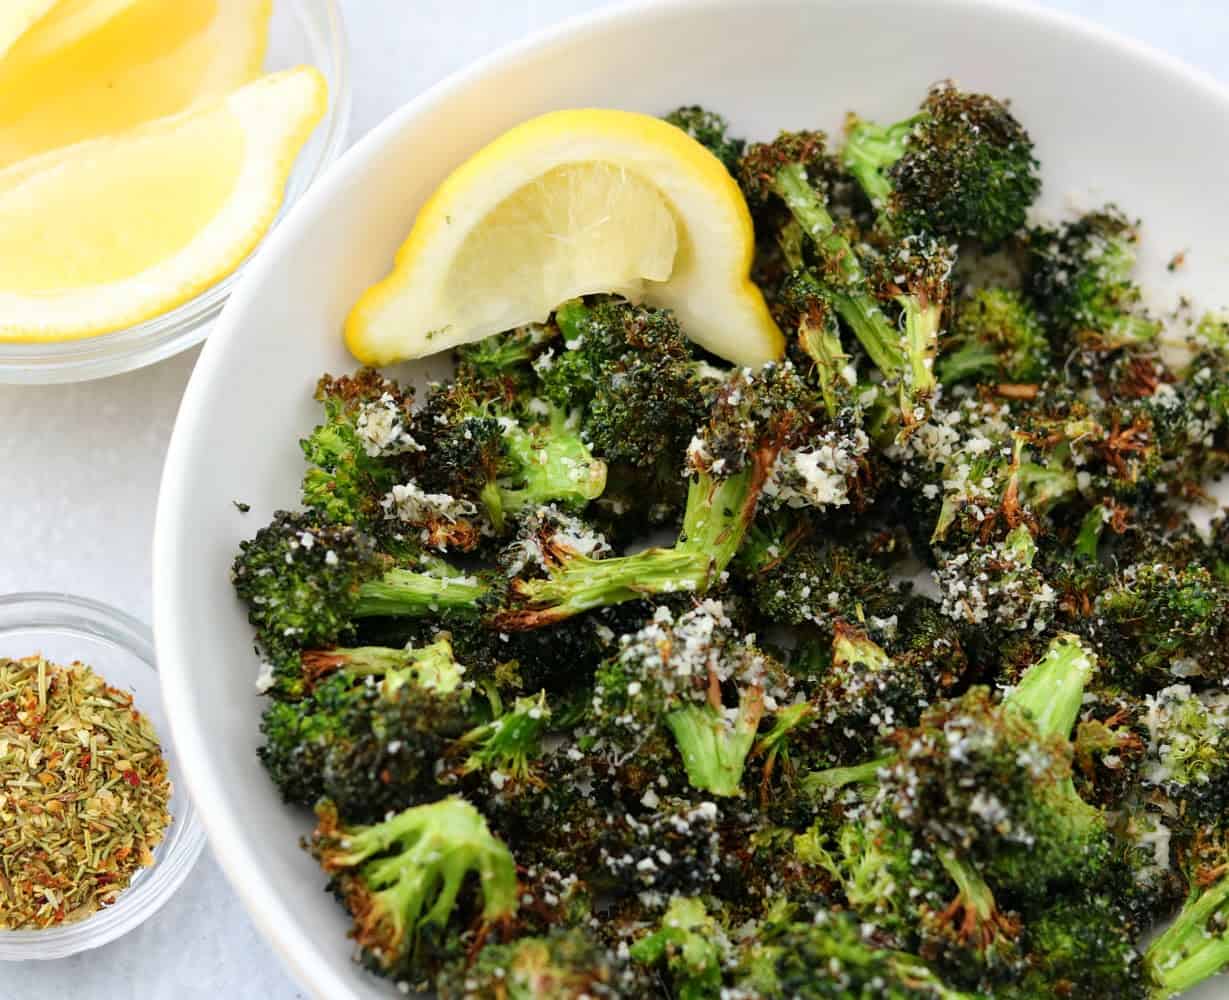 One bowl of broccoli with sliced lemon